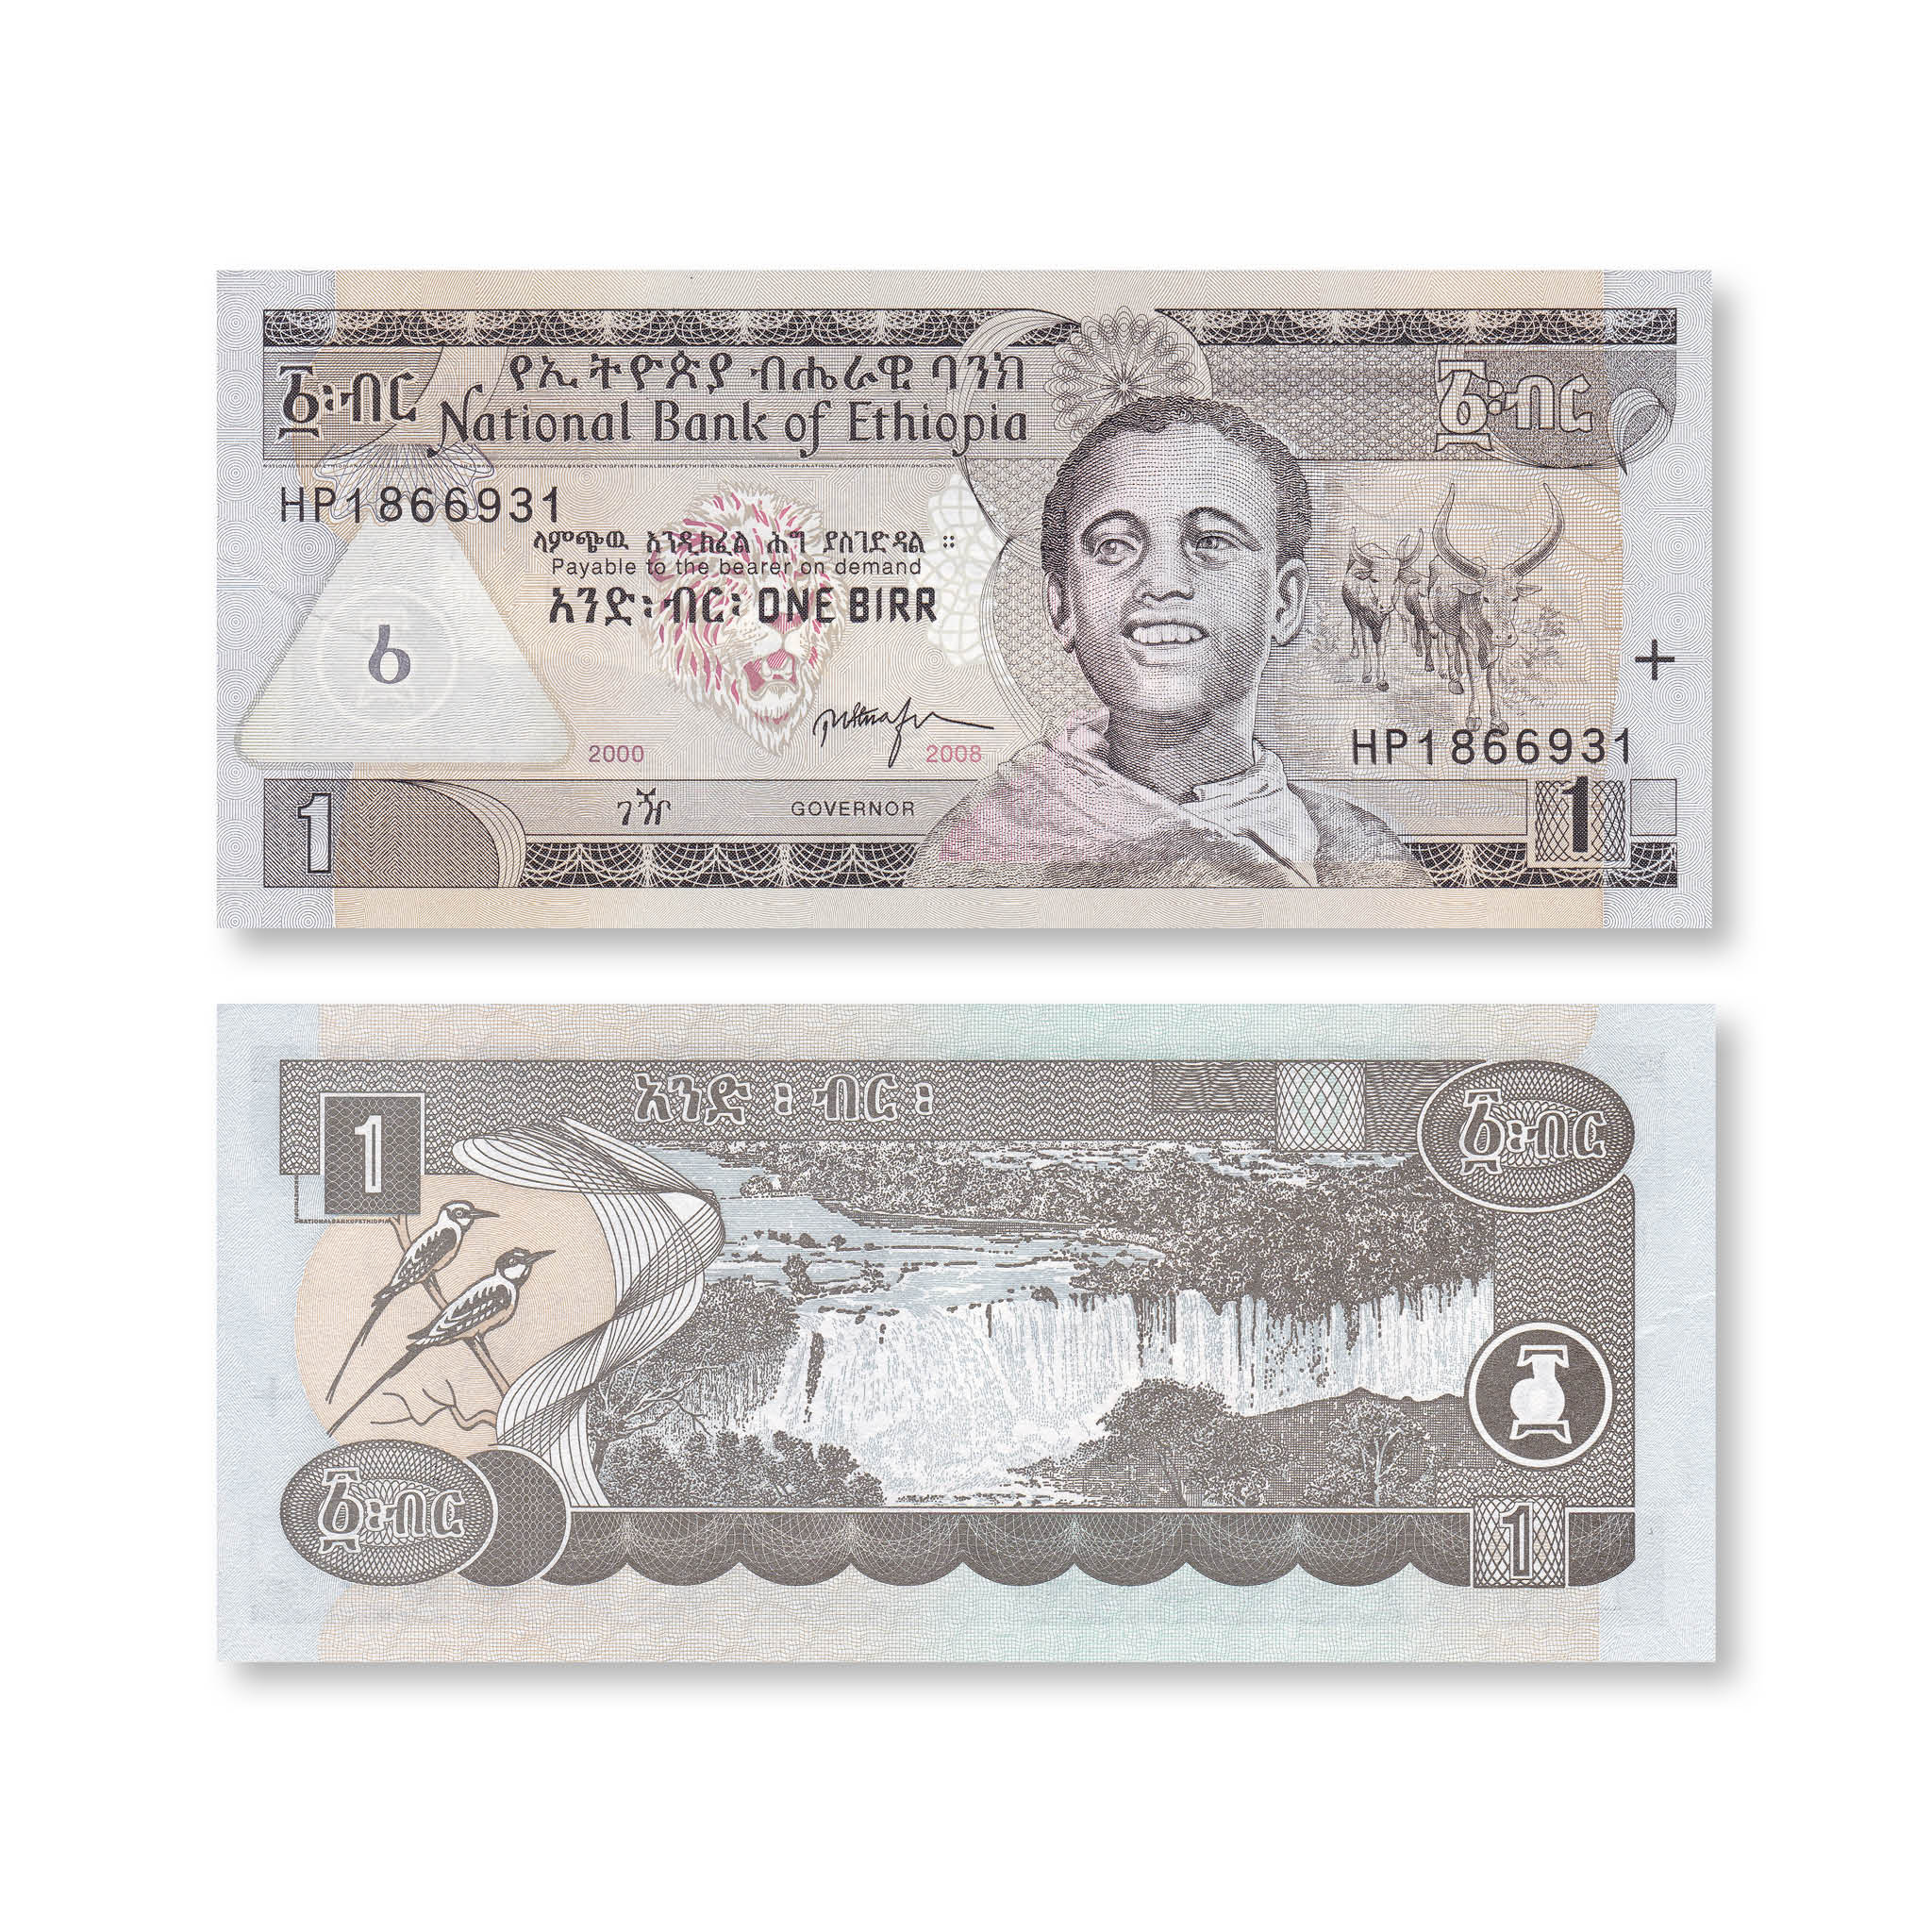 Ethiopia 1 Birr, 2000/2008, B330c, P46, UNC - Robert's World Money - World Banknotes